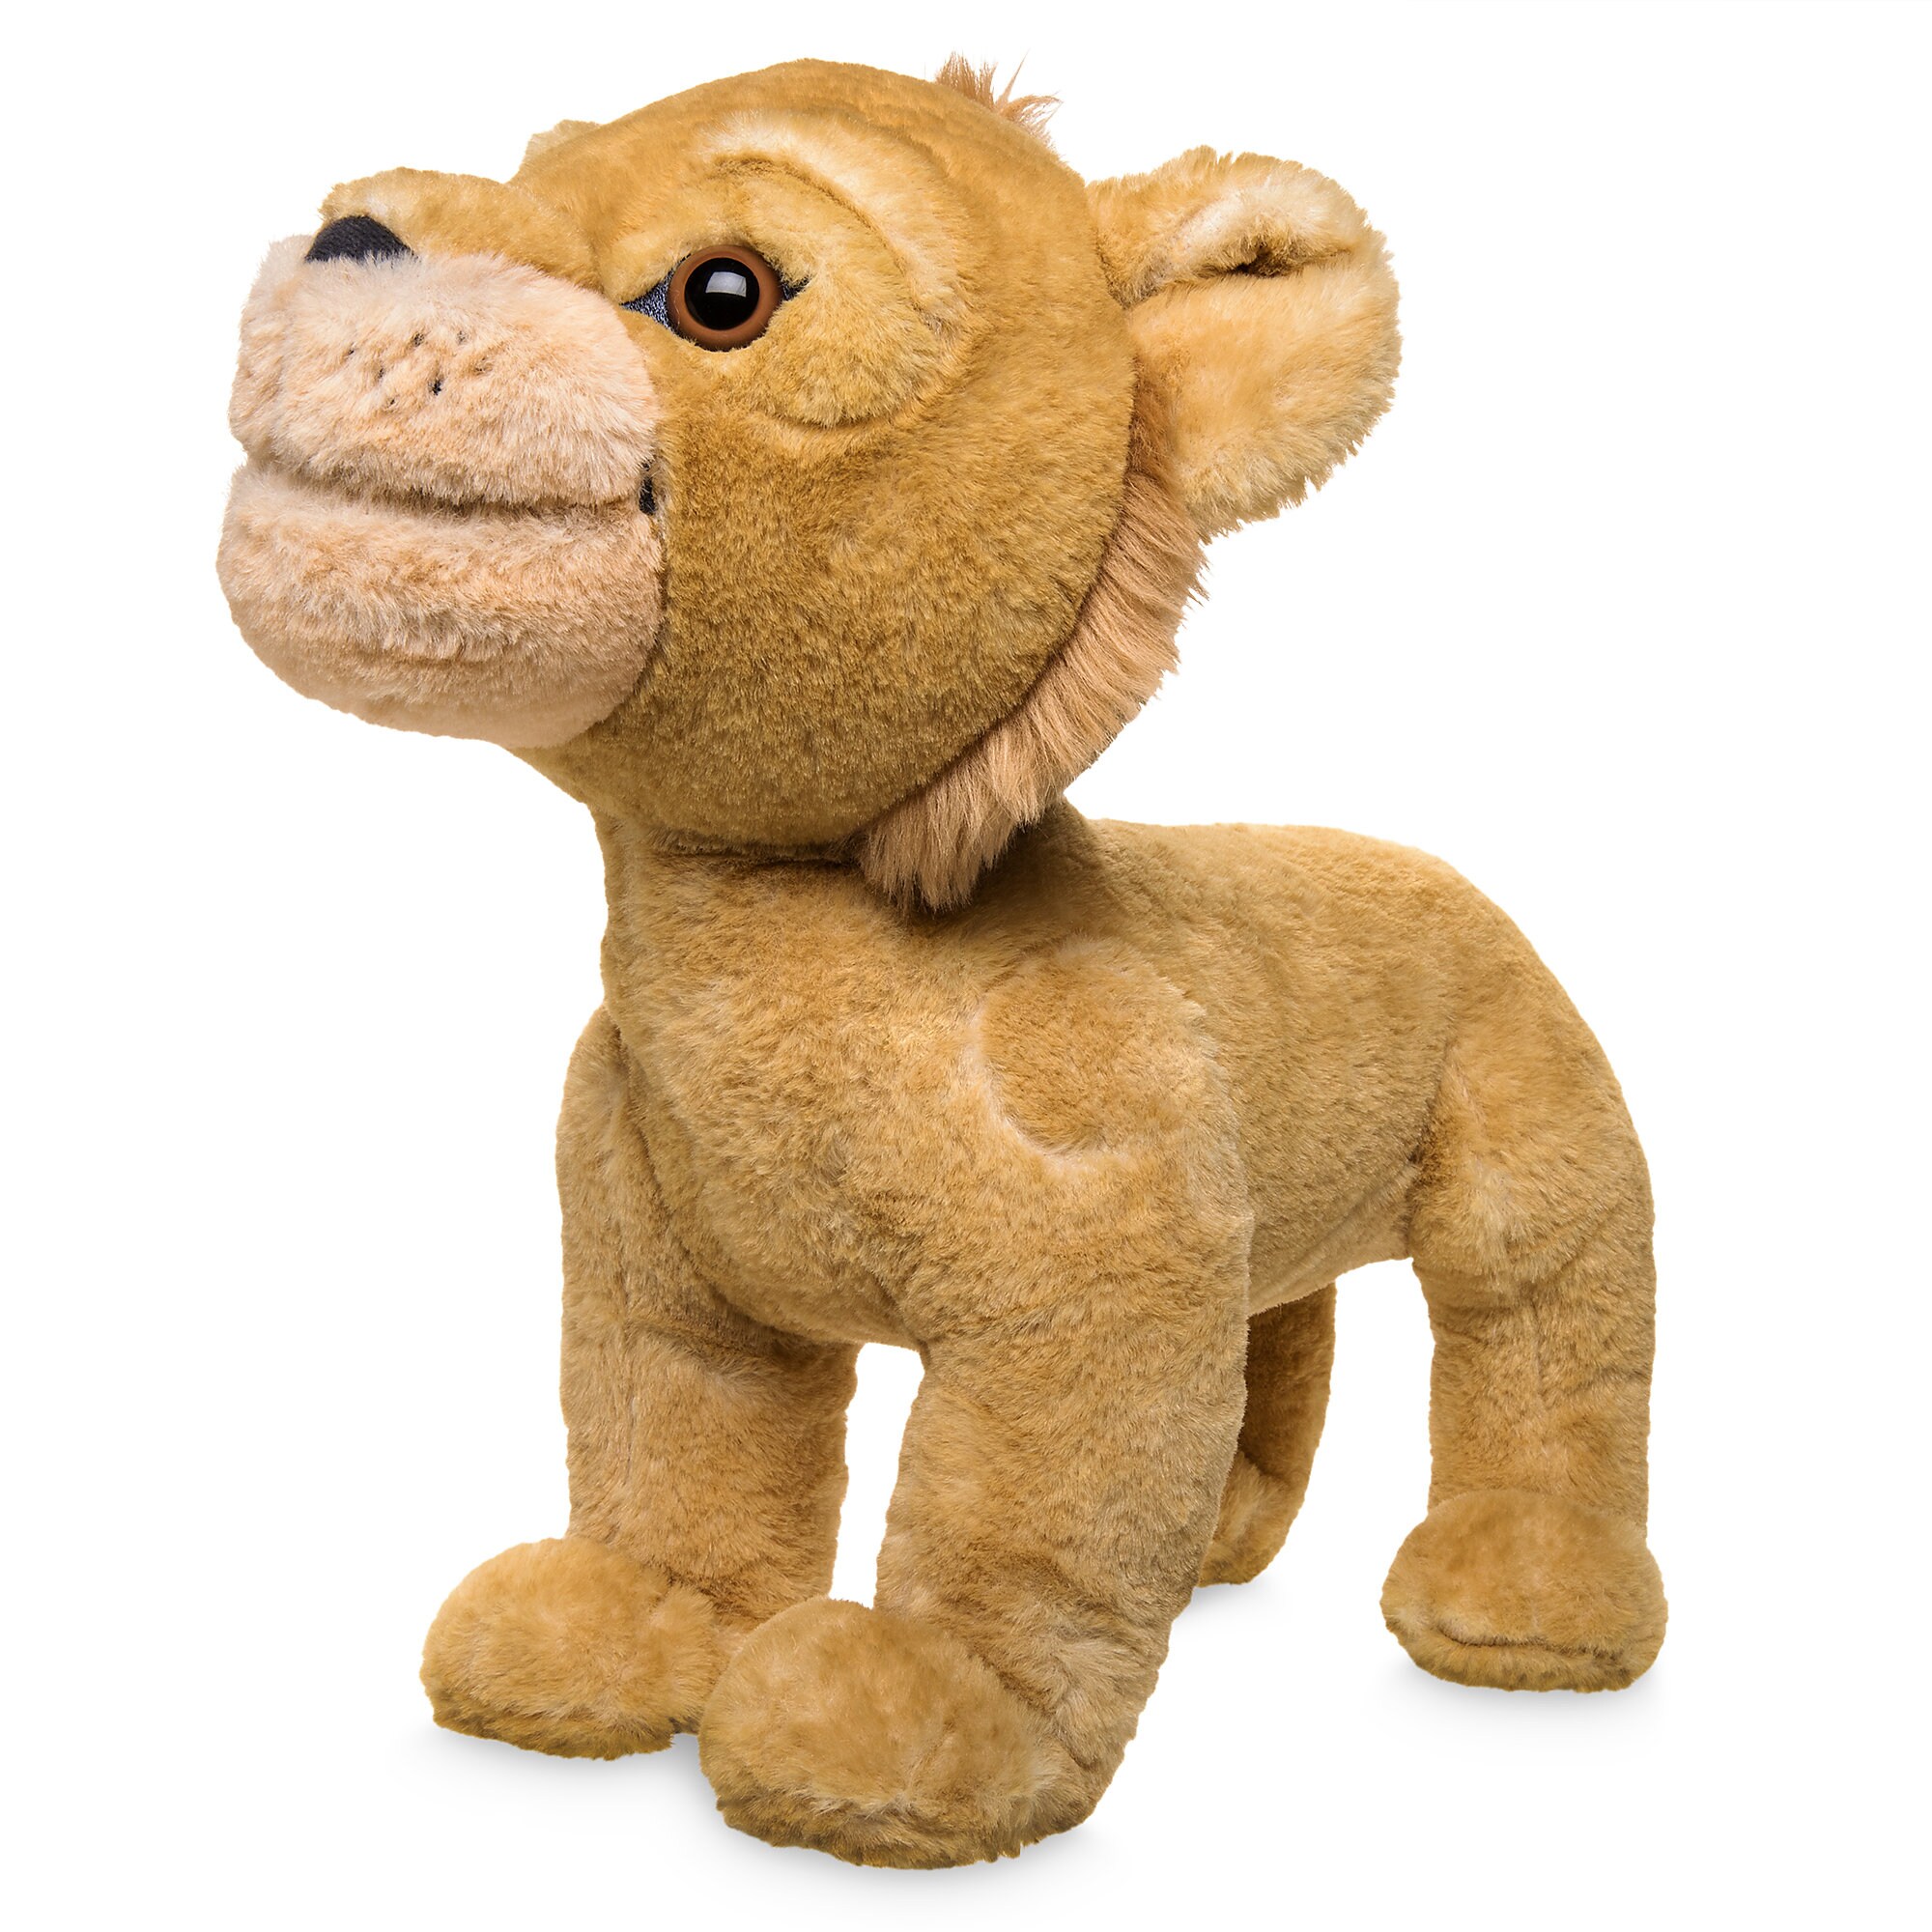 The Lion King Simba Plush